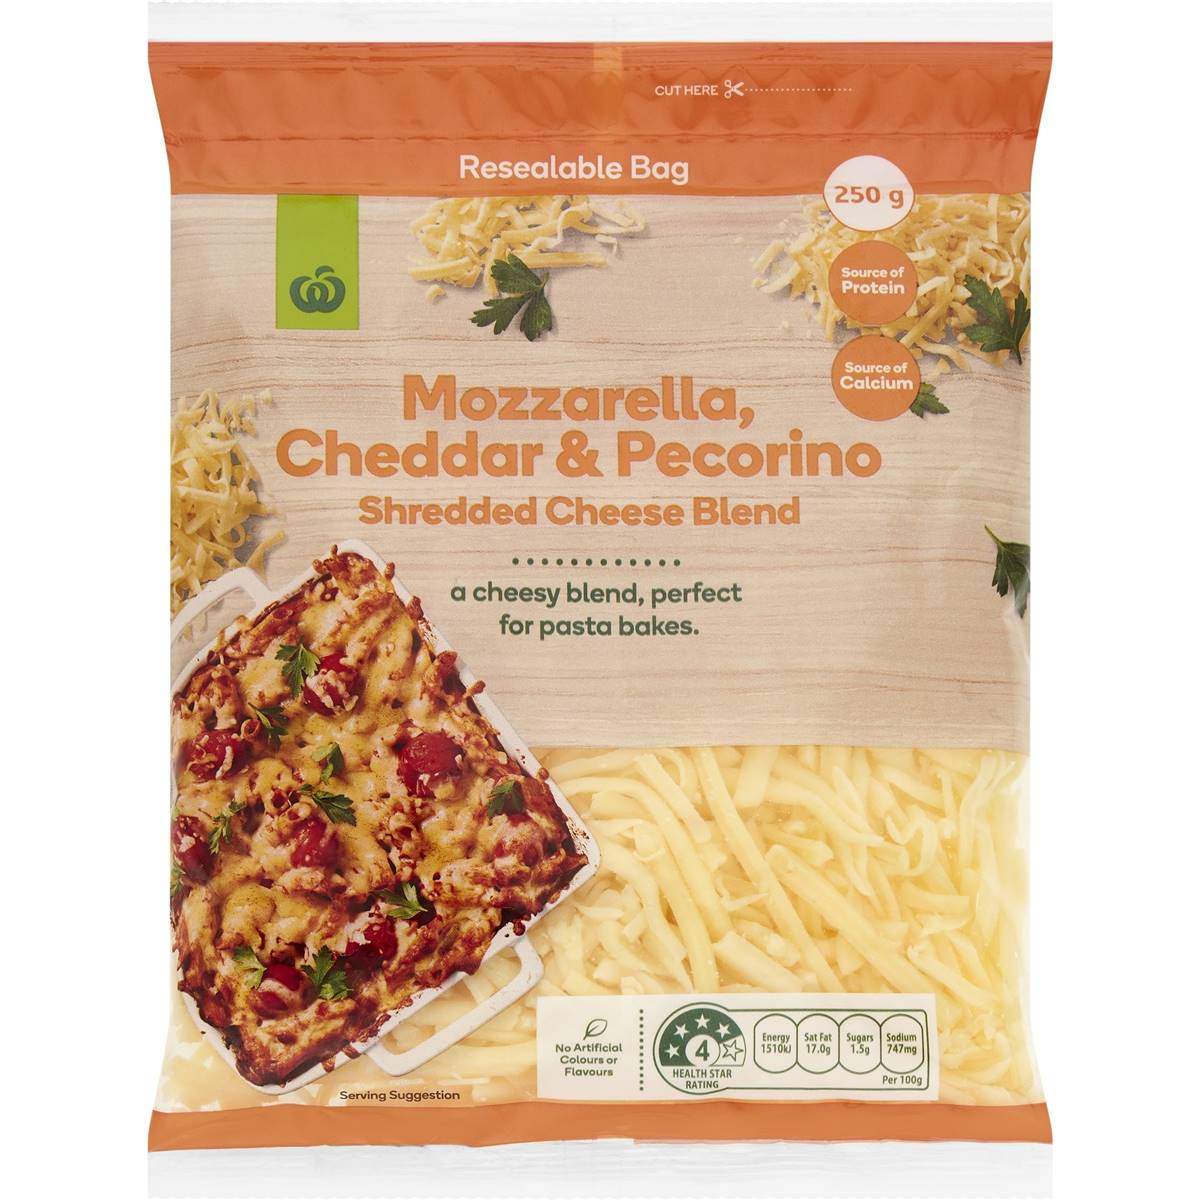 Calories in Woolworths Shredded Mozzarella Cheddar & Pecorino Blend